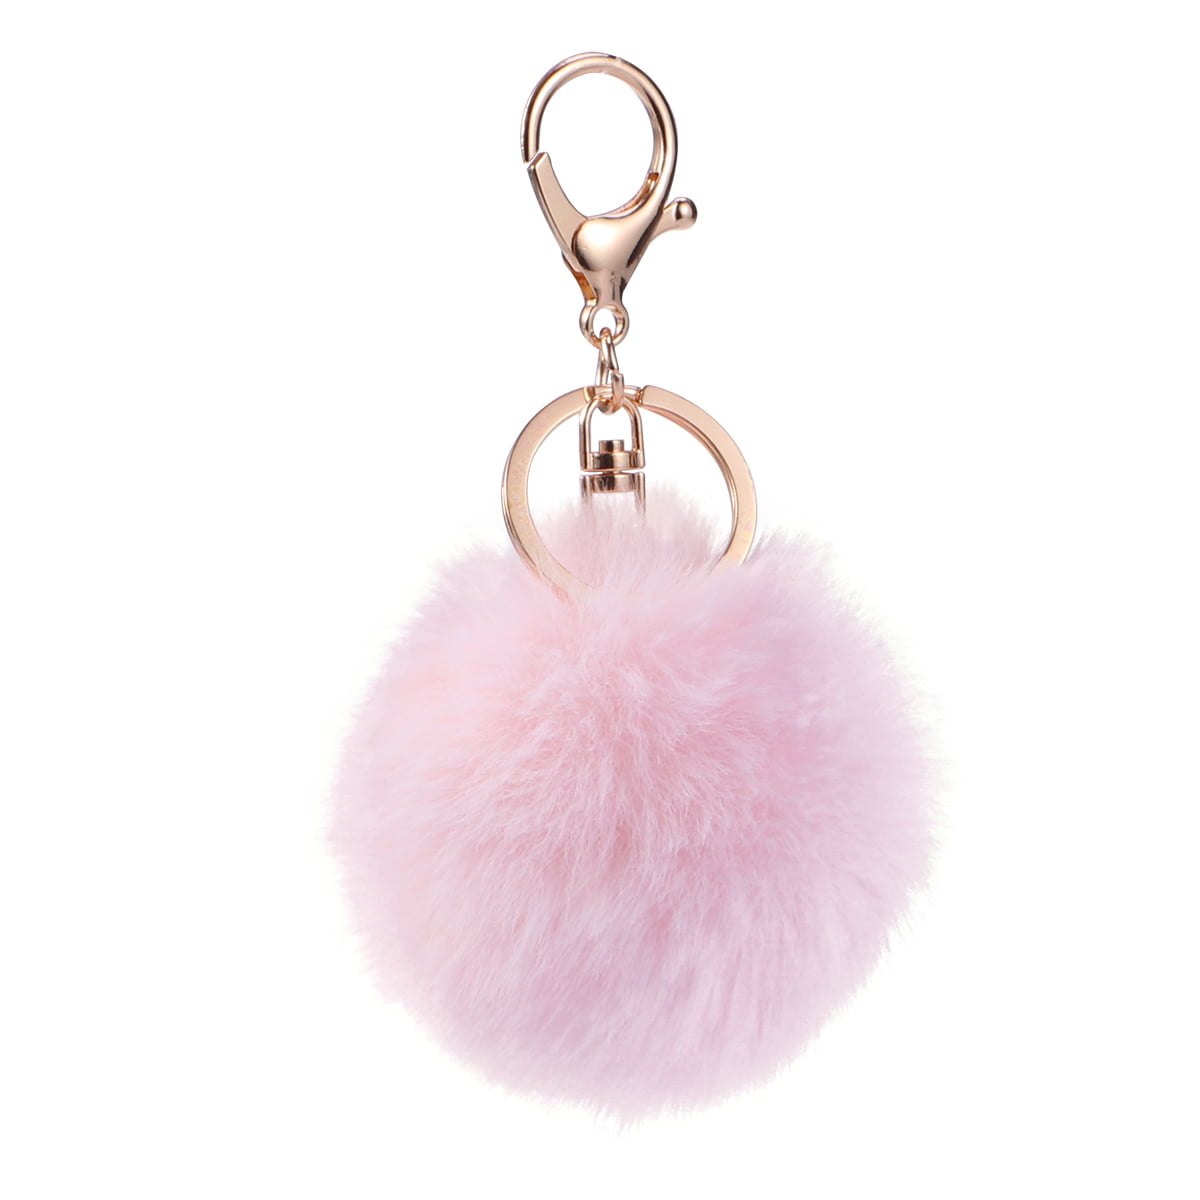 Imitation Rabbit Fur Fluffy Ball Handbag Car Pendant Charm Key Chain Keyring 8CM